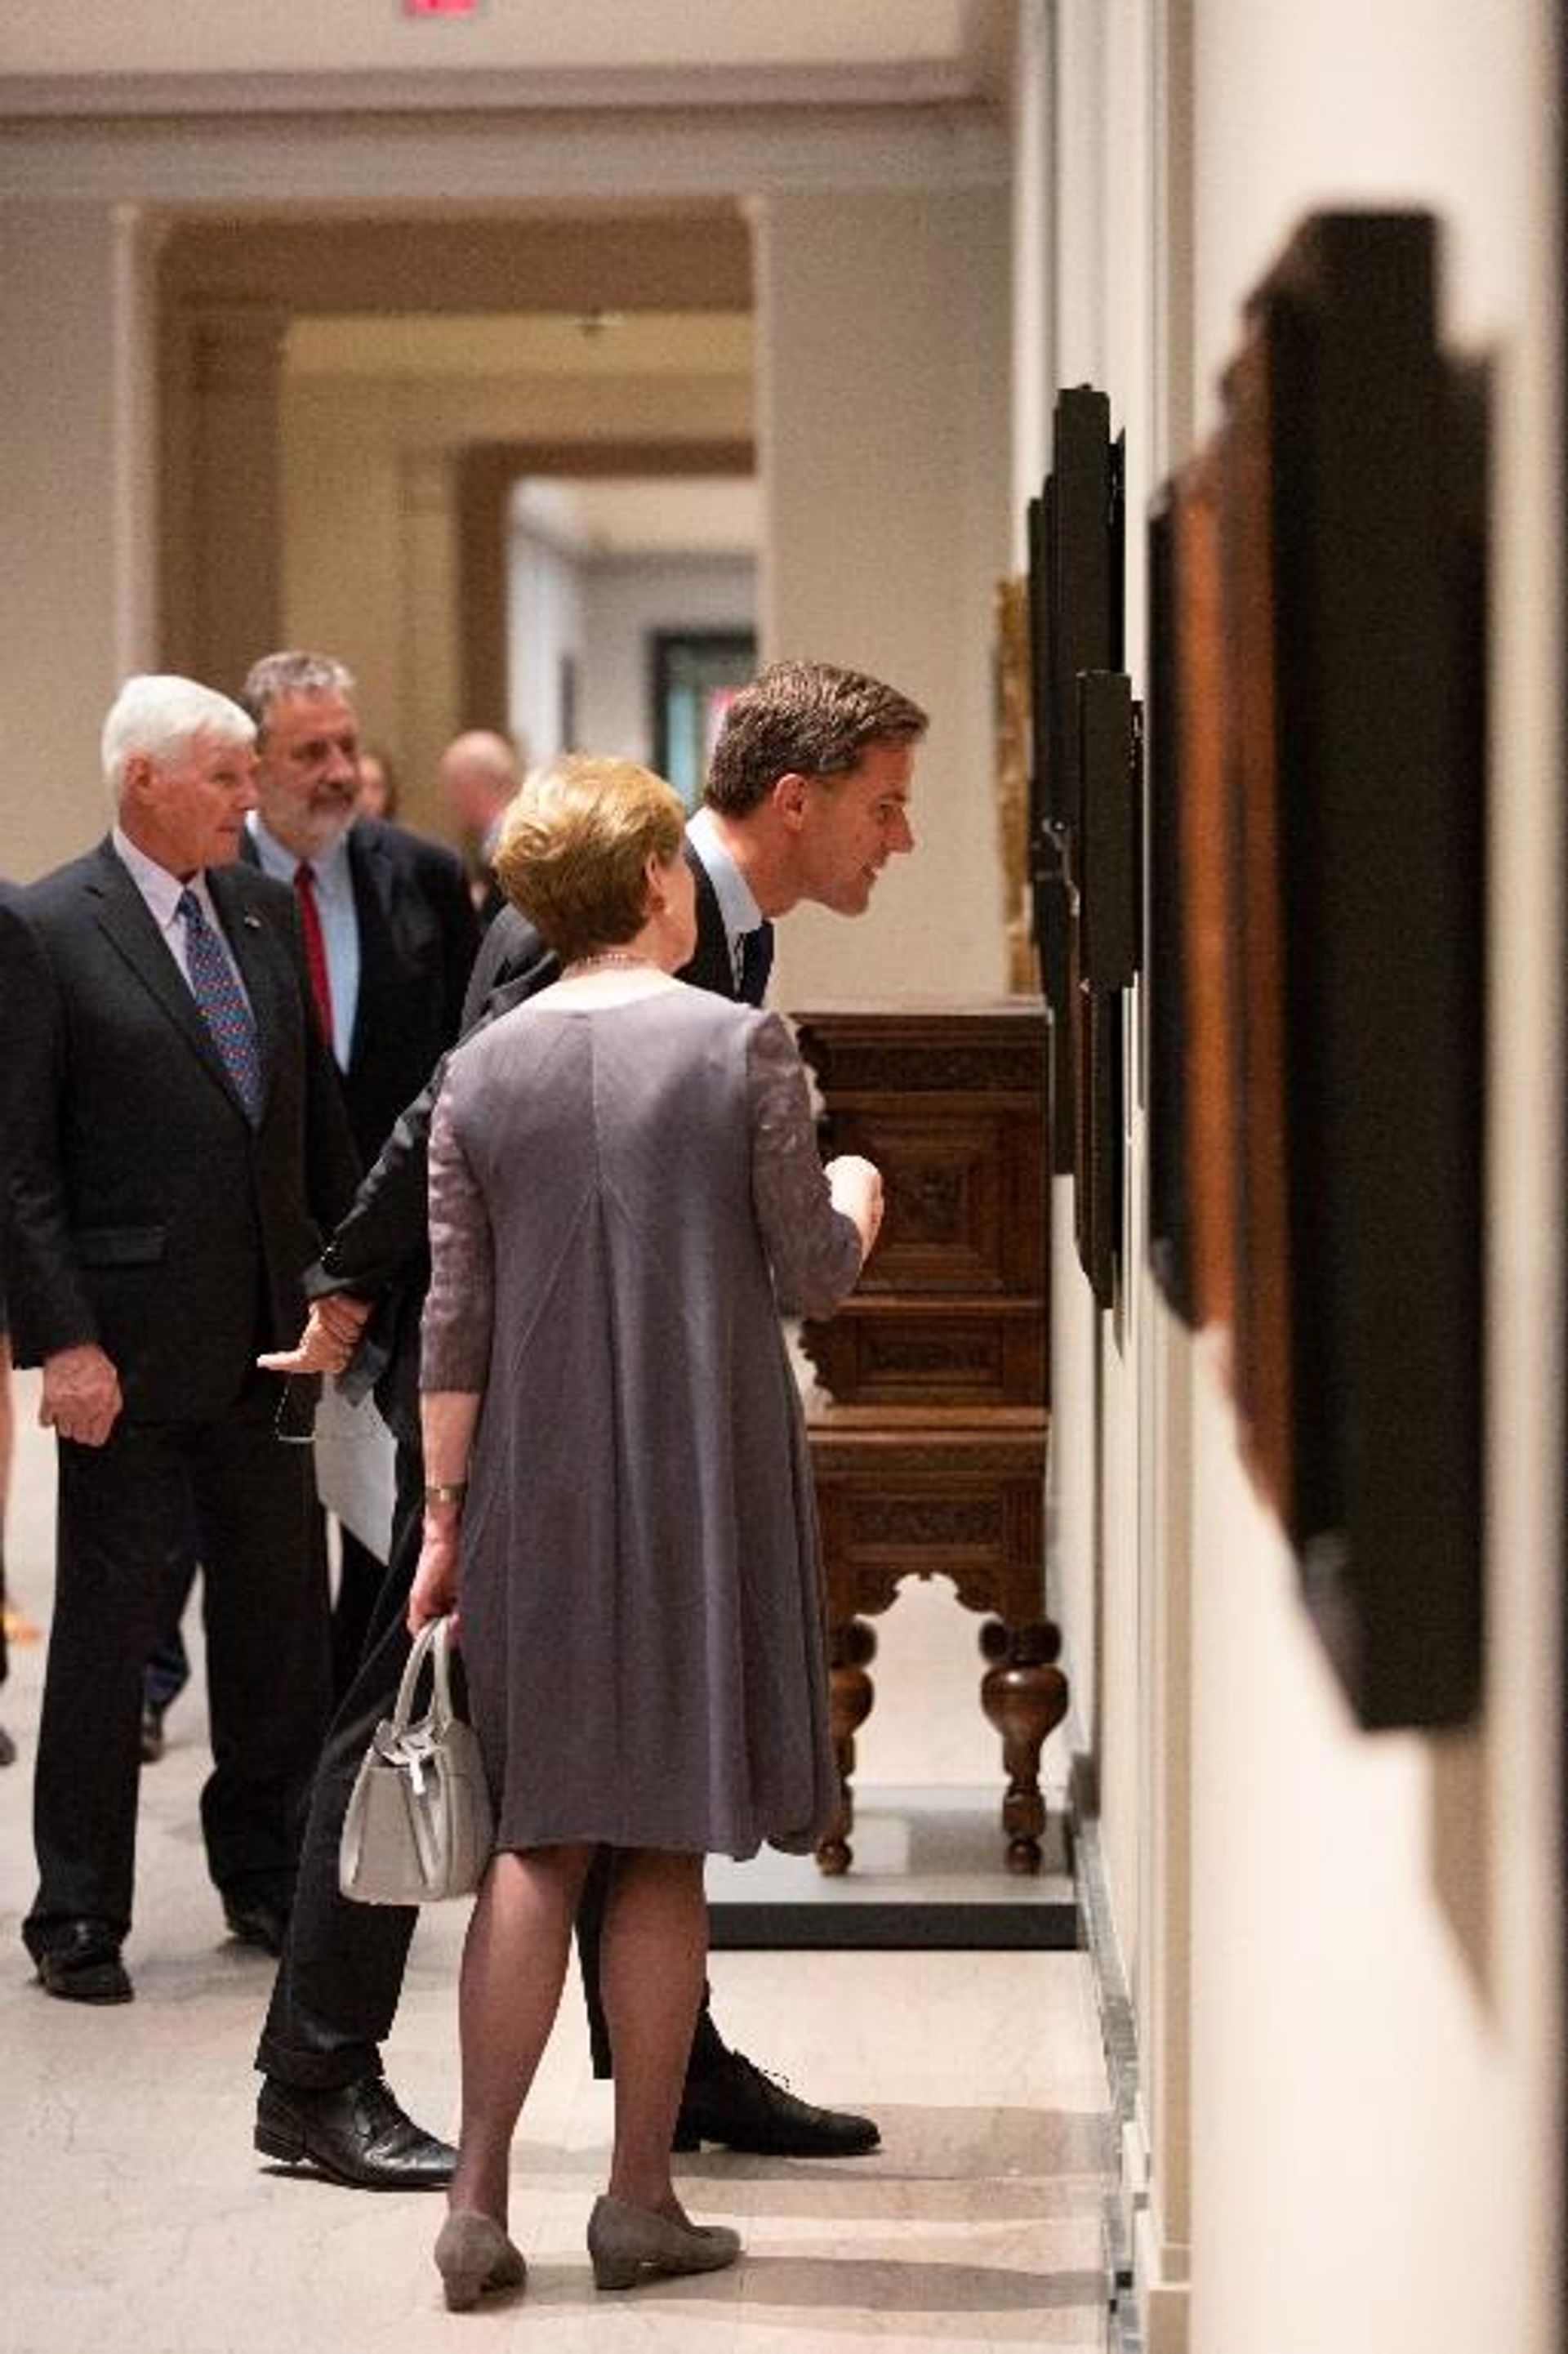 Dutch Prime Minister Mark Rutte with Susan Weatherbie at MFA Boston; also pictured Eijk van Otterloo (left) and Ambassador Henne Schuwer Photo: Michael Blanchard